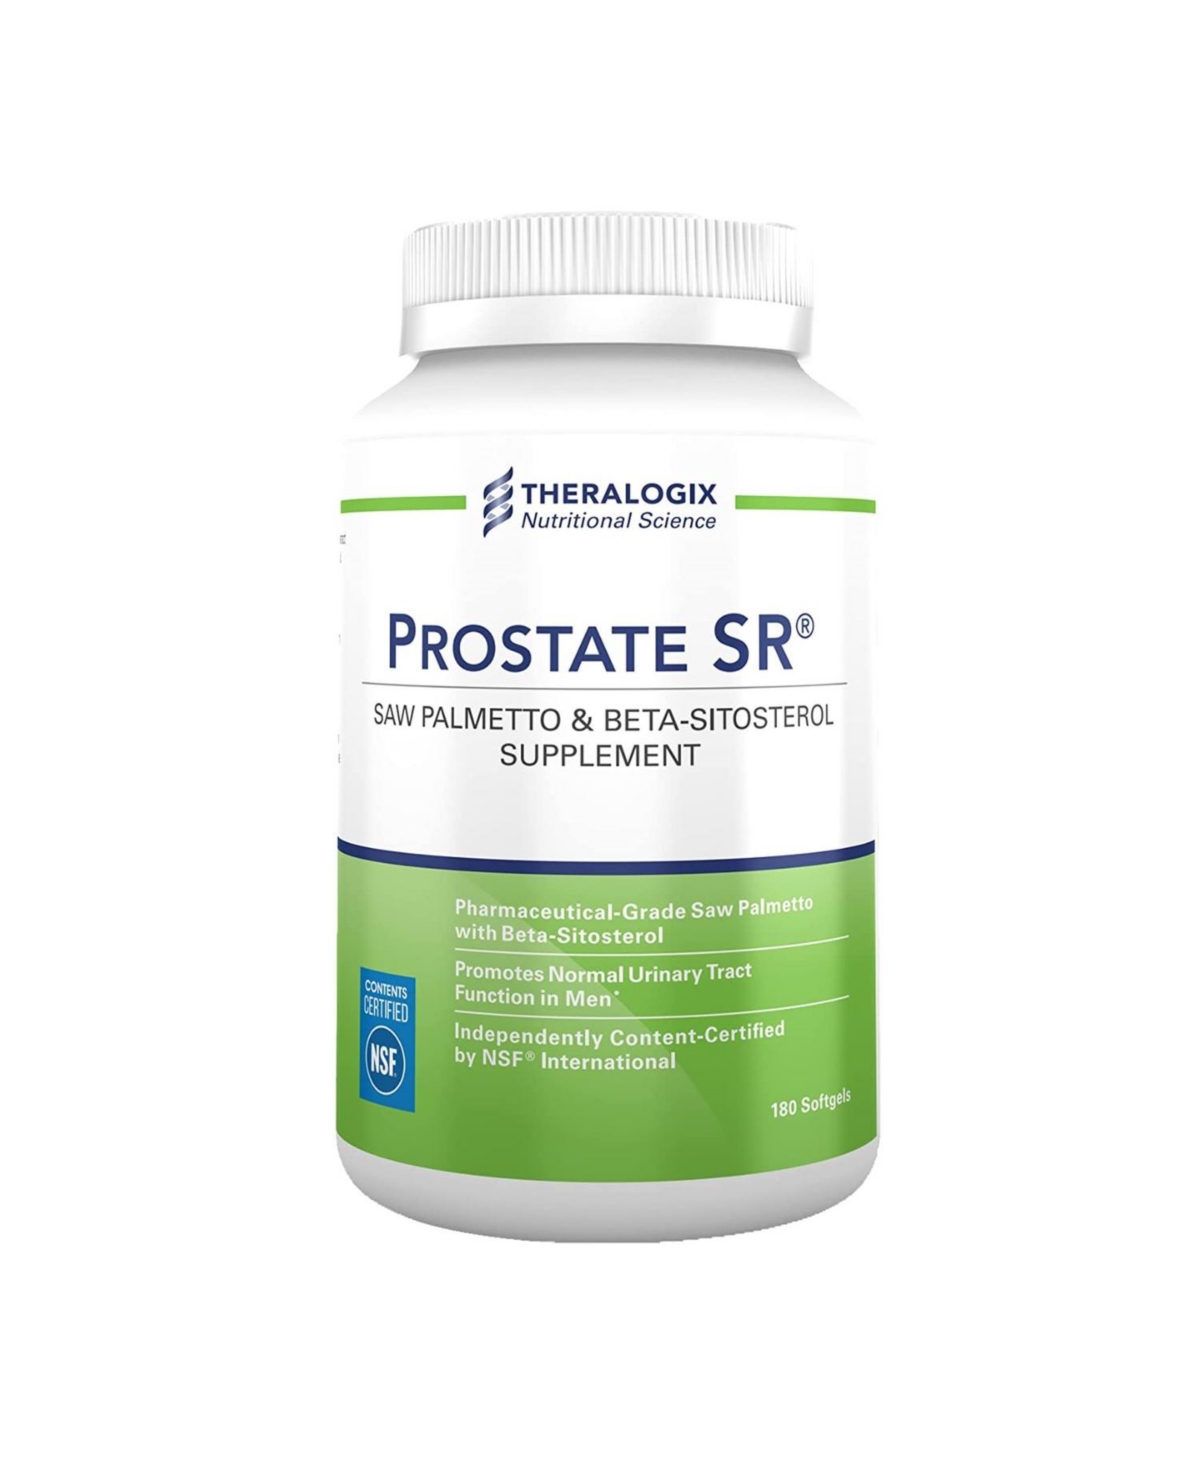 Prostate Sr Saw Palmetto & Beta-Sitosterol Supplement - Open Miscellaneous